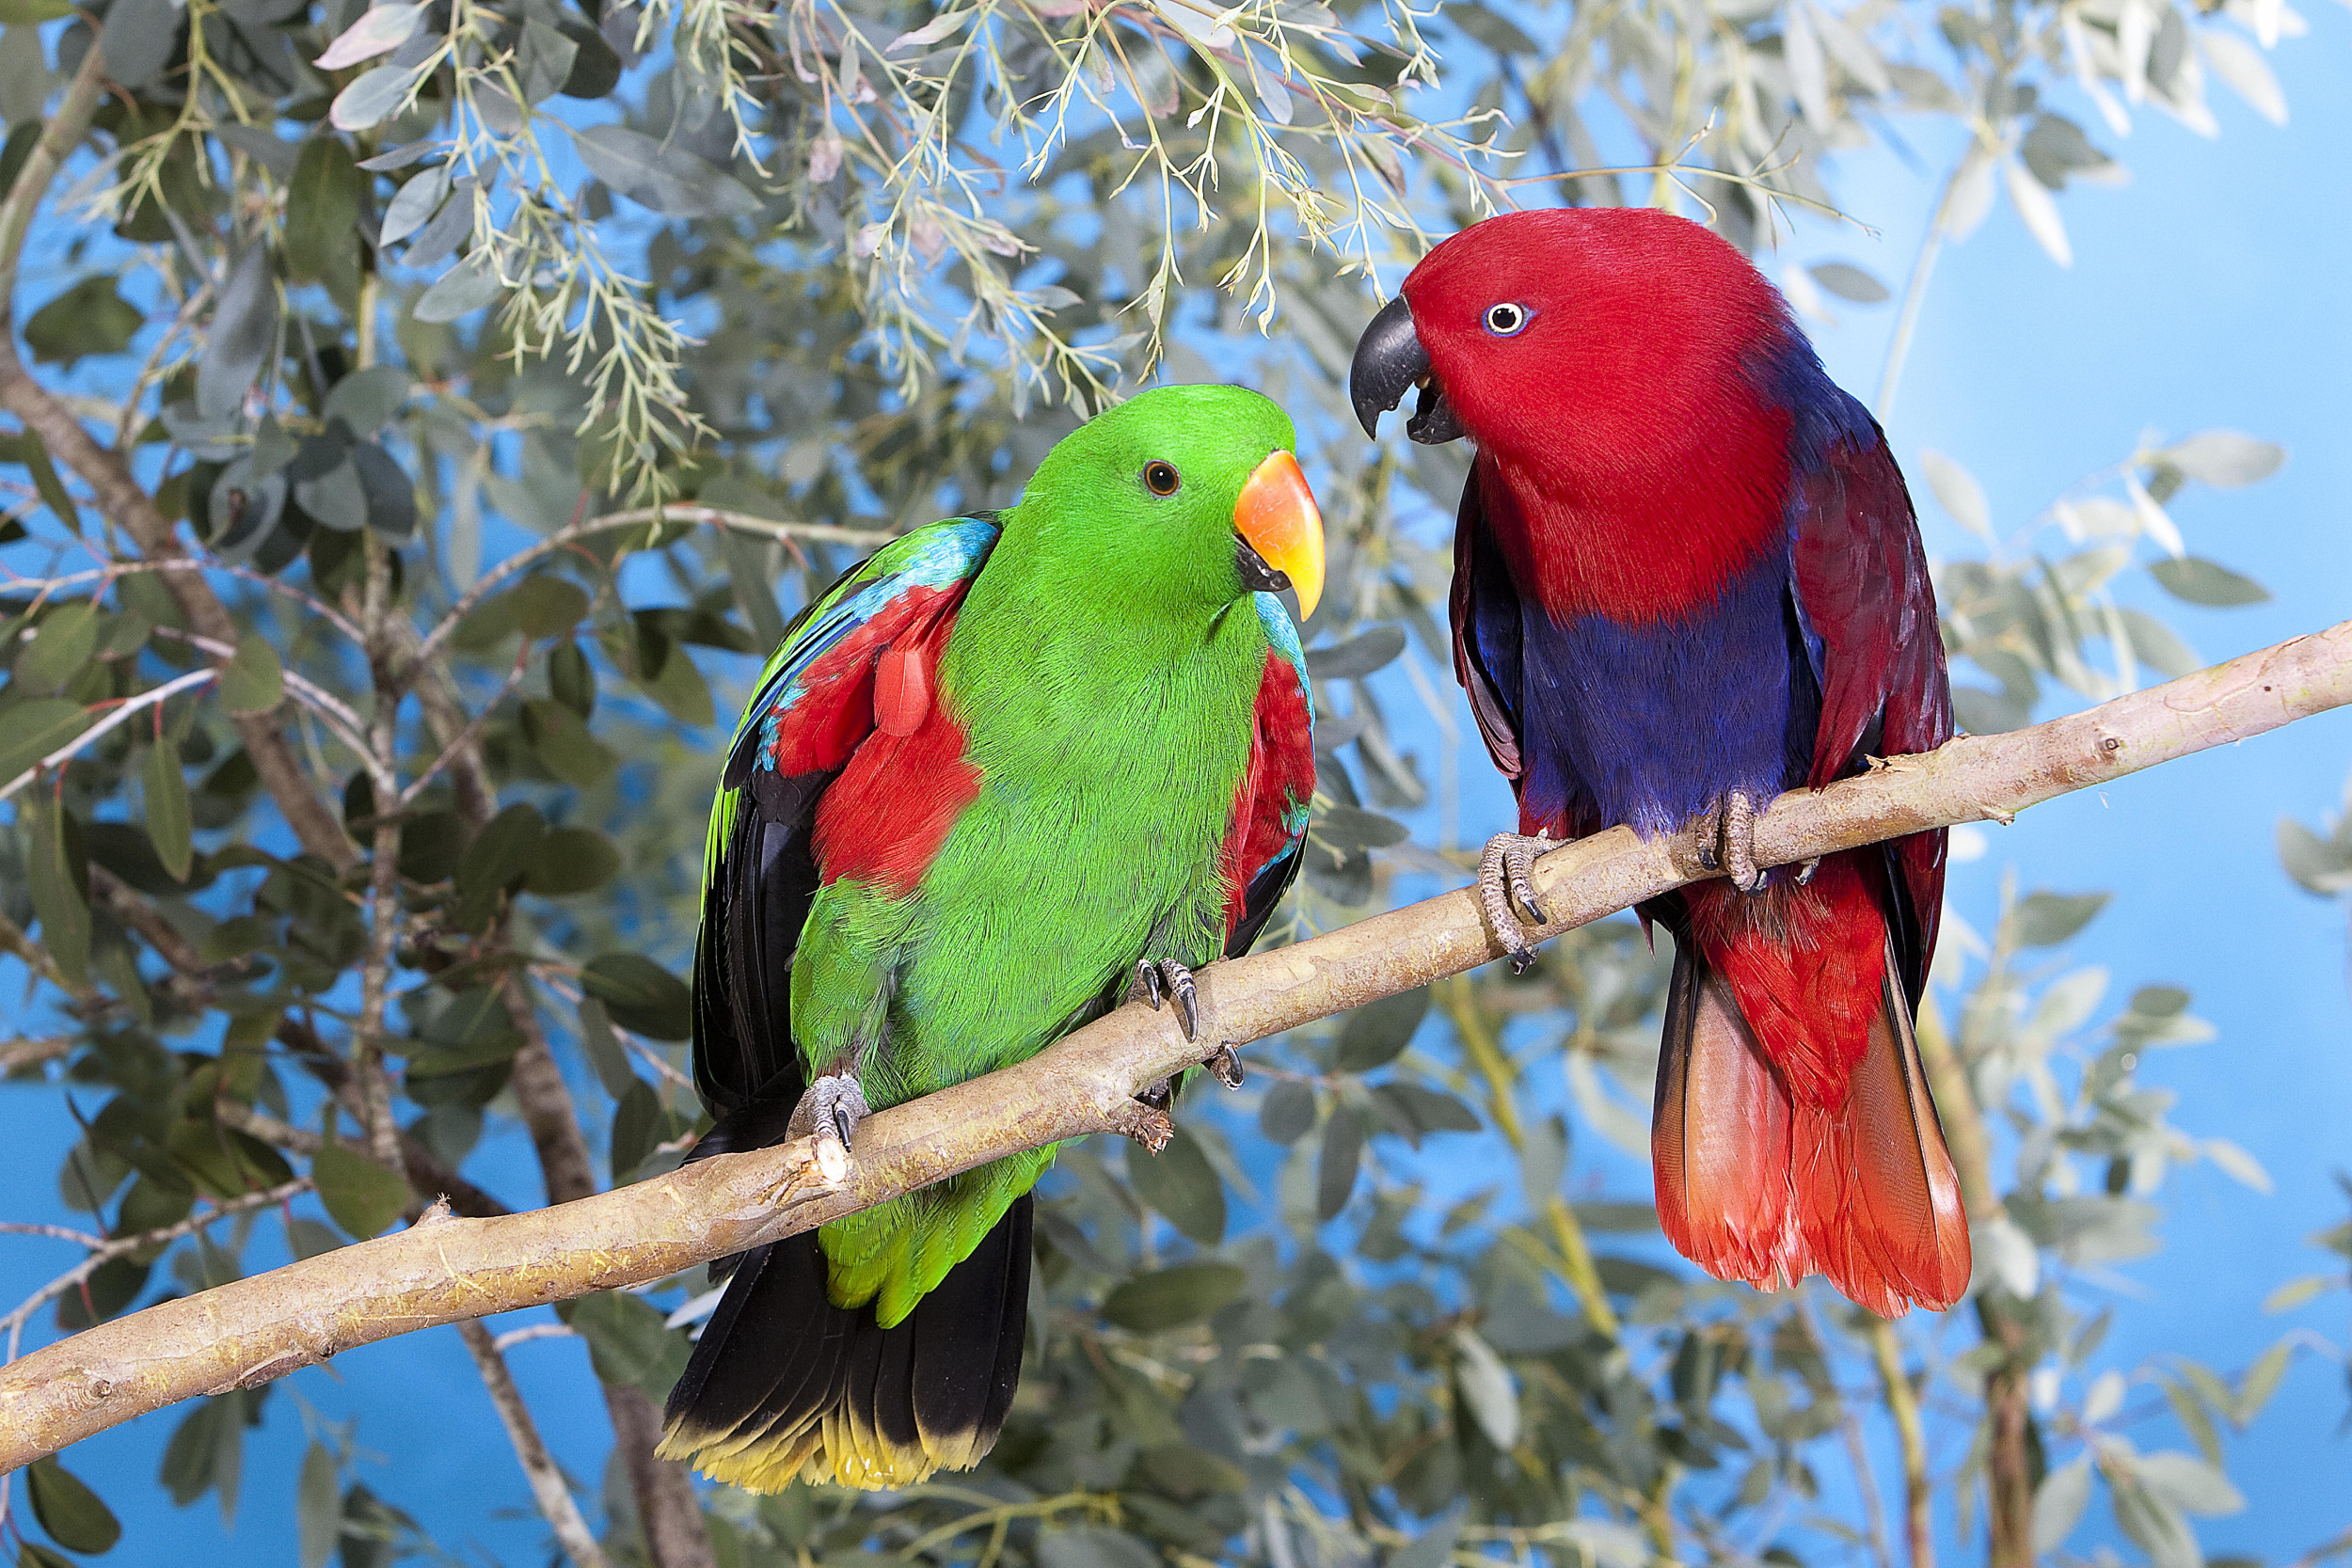 Michelangelo solsikke minimum Social Media Helps Sounds of Endangered Birds Soar to No. 5 on the Australian  Music Charts